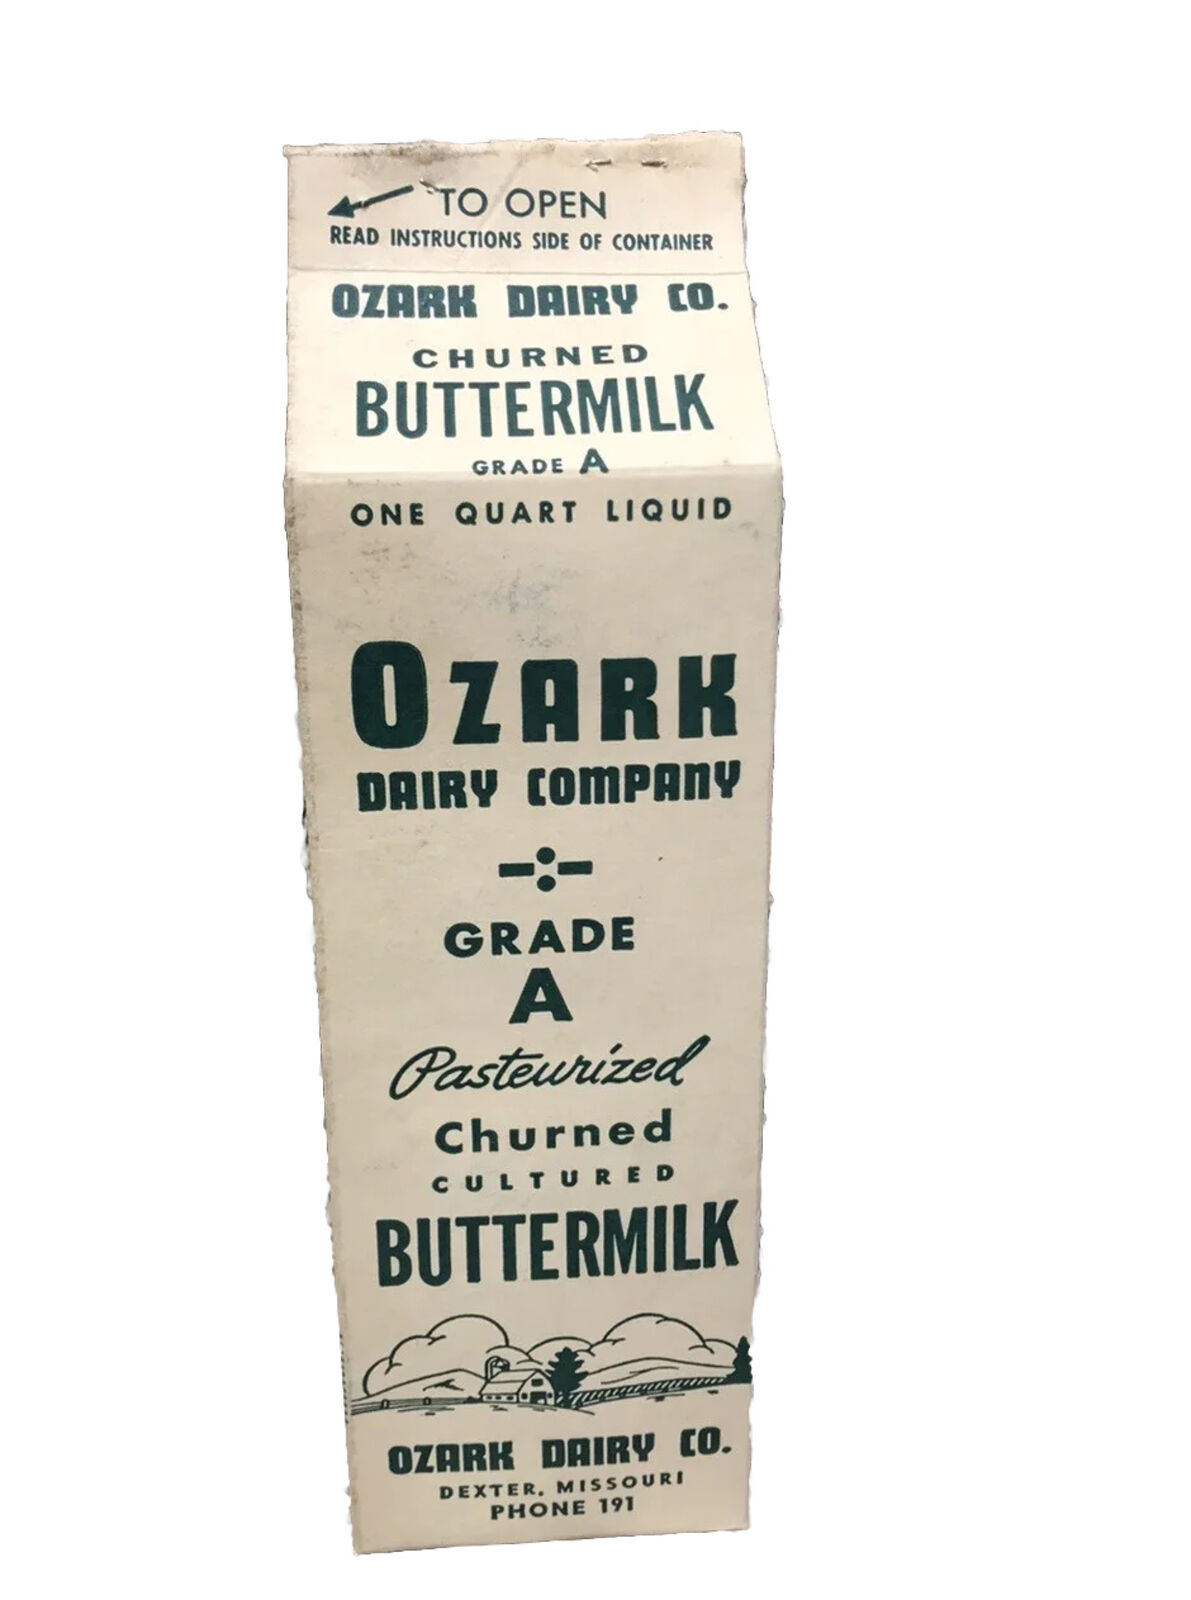 Rare Vintage Buttermilk CONTAINER 1 QUART (waxed CARTON) Ozark Dairy Dexter, Mo